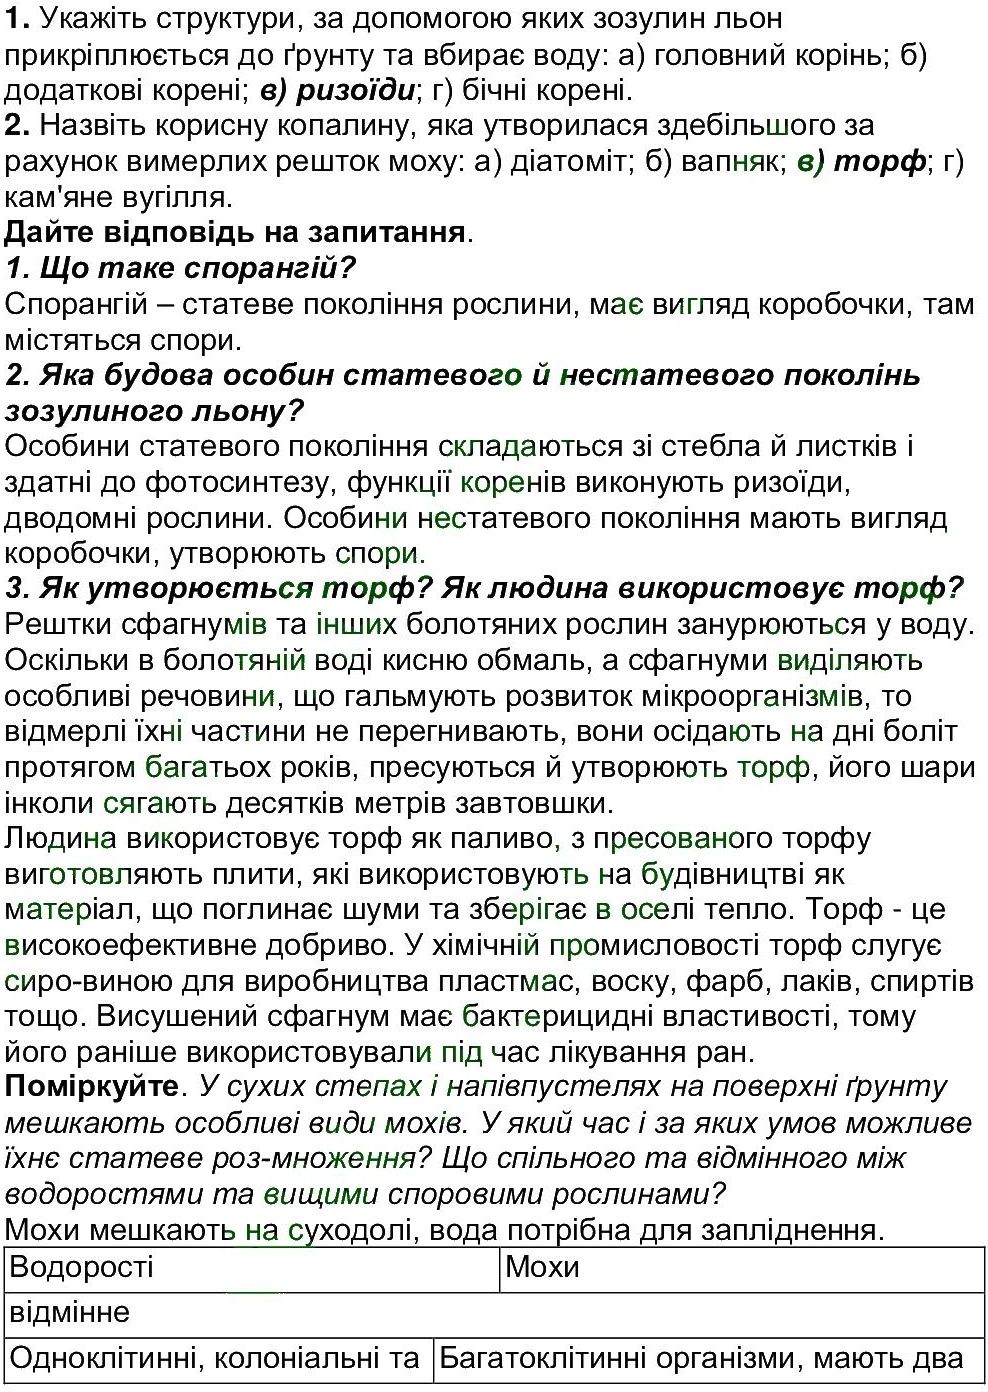 6-biologiya-li-ostapchenko-pg-balan-nyu-matyash-2016--tema-4-riznomanitnist-roslin-ст156-159-rnd2356.jpg